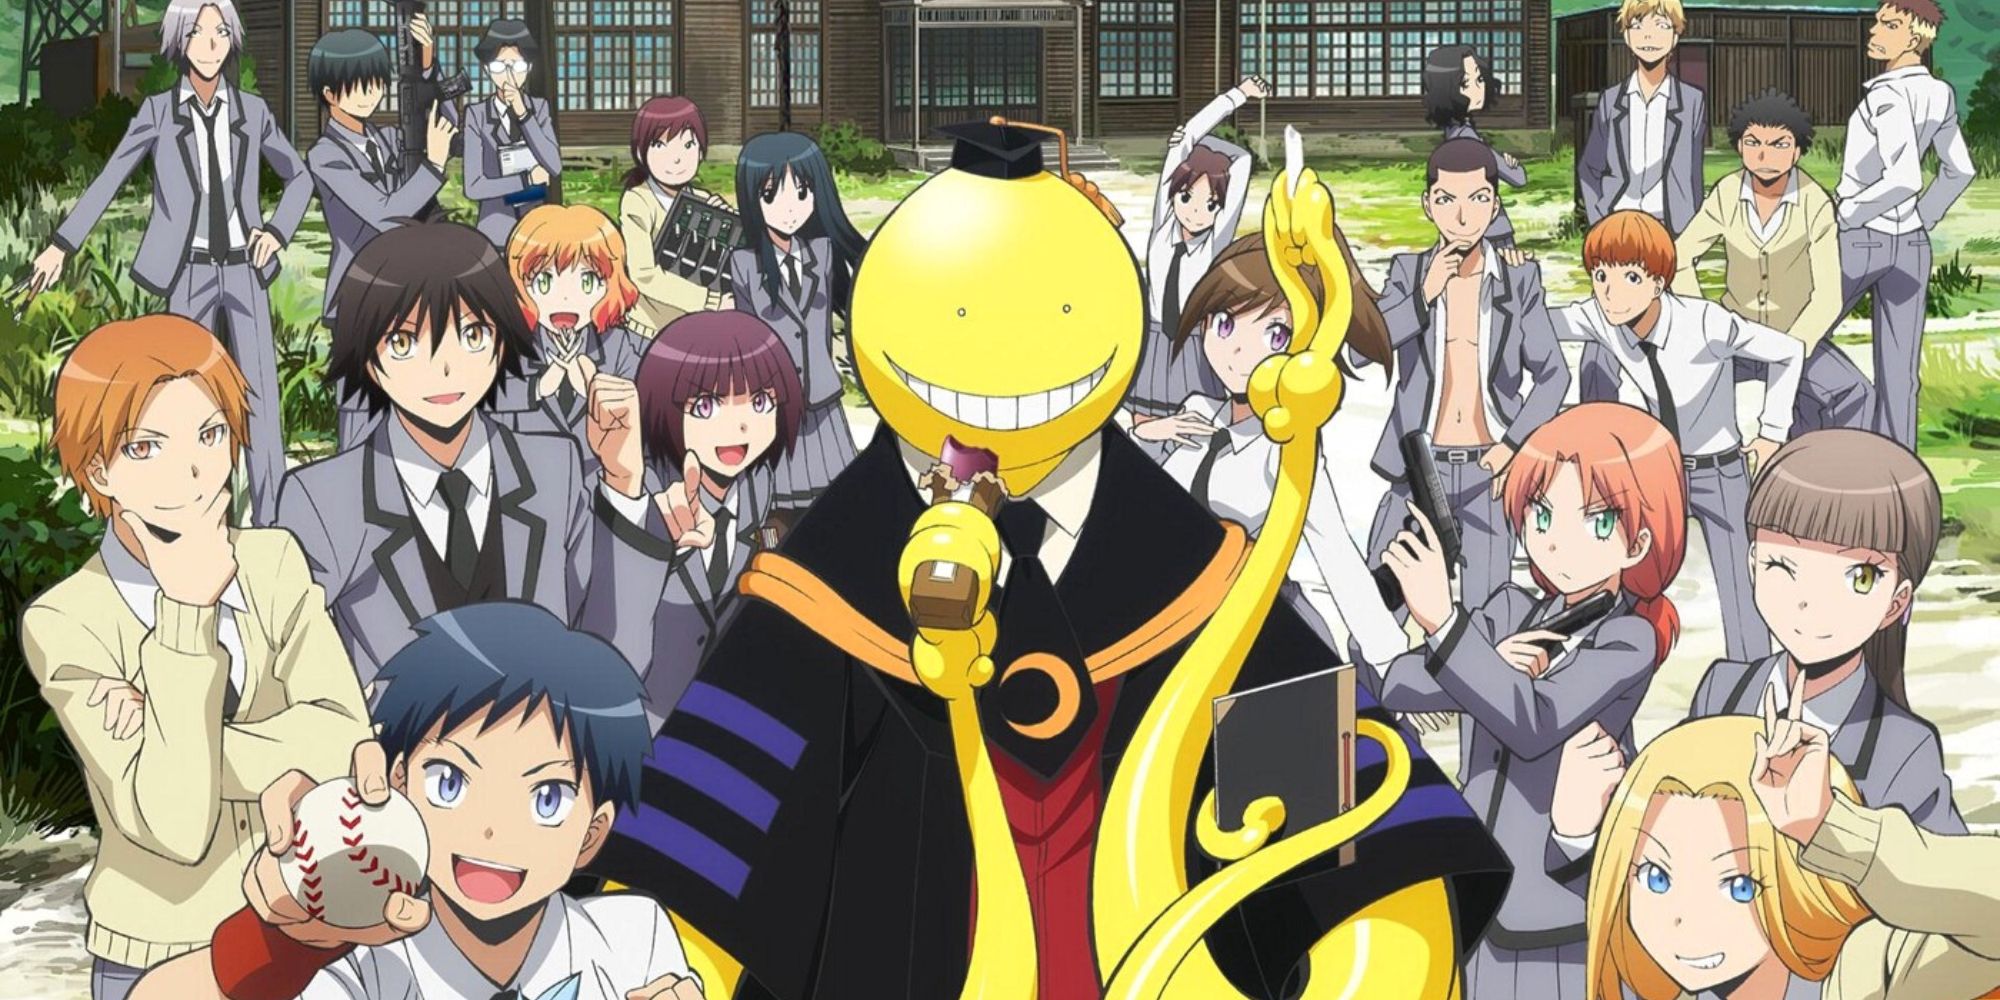 Assassination Classroom - Anime United